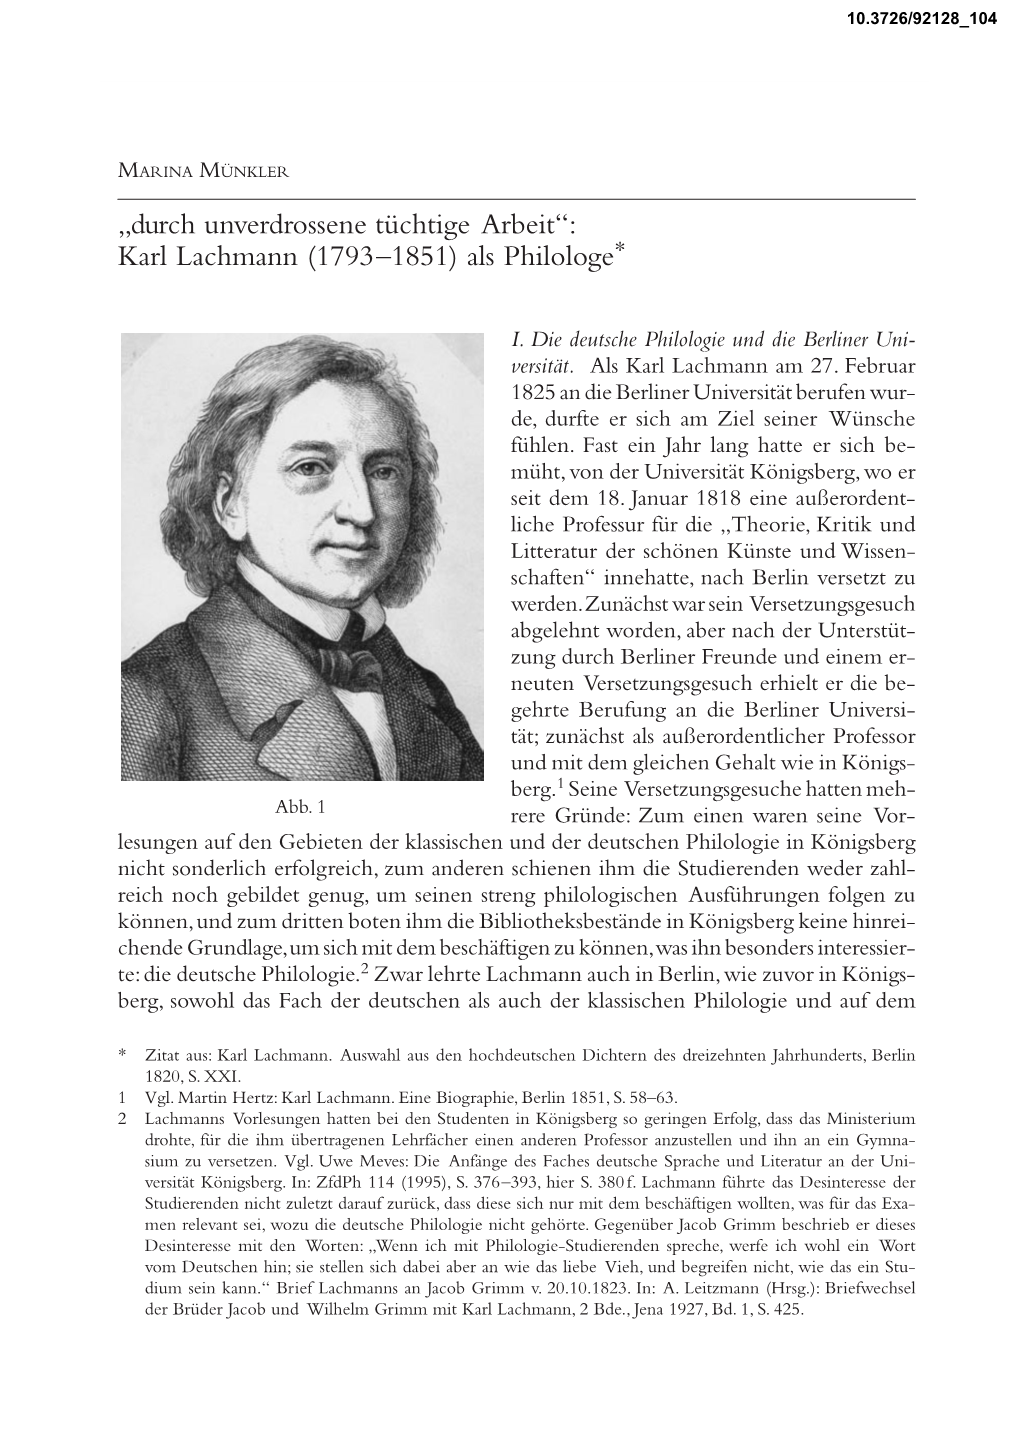 Karl Lachmann (1793–1851) Als Philologe*